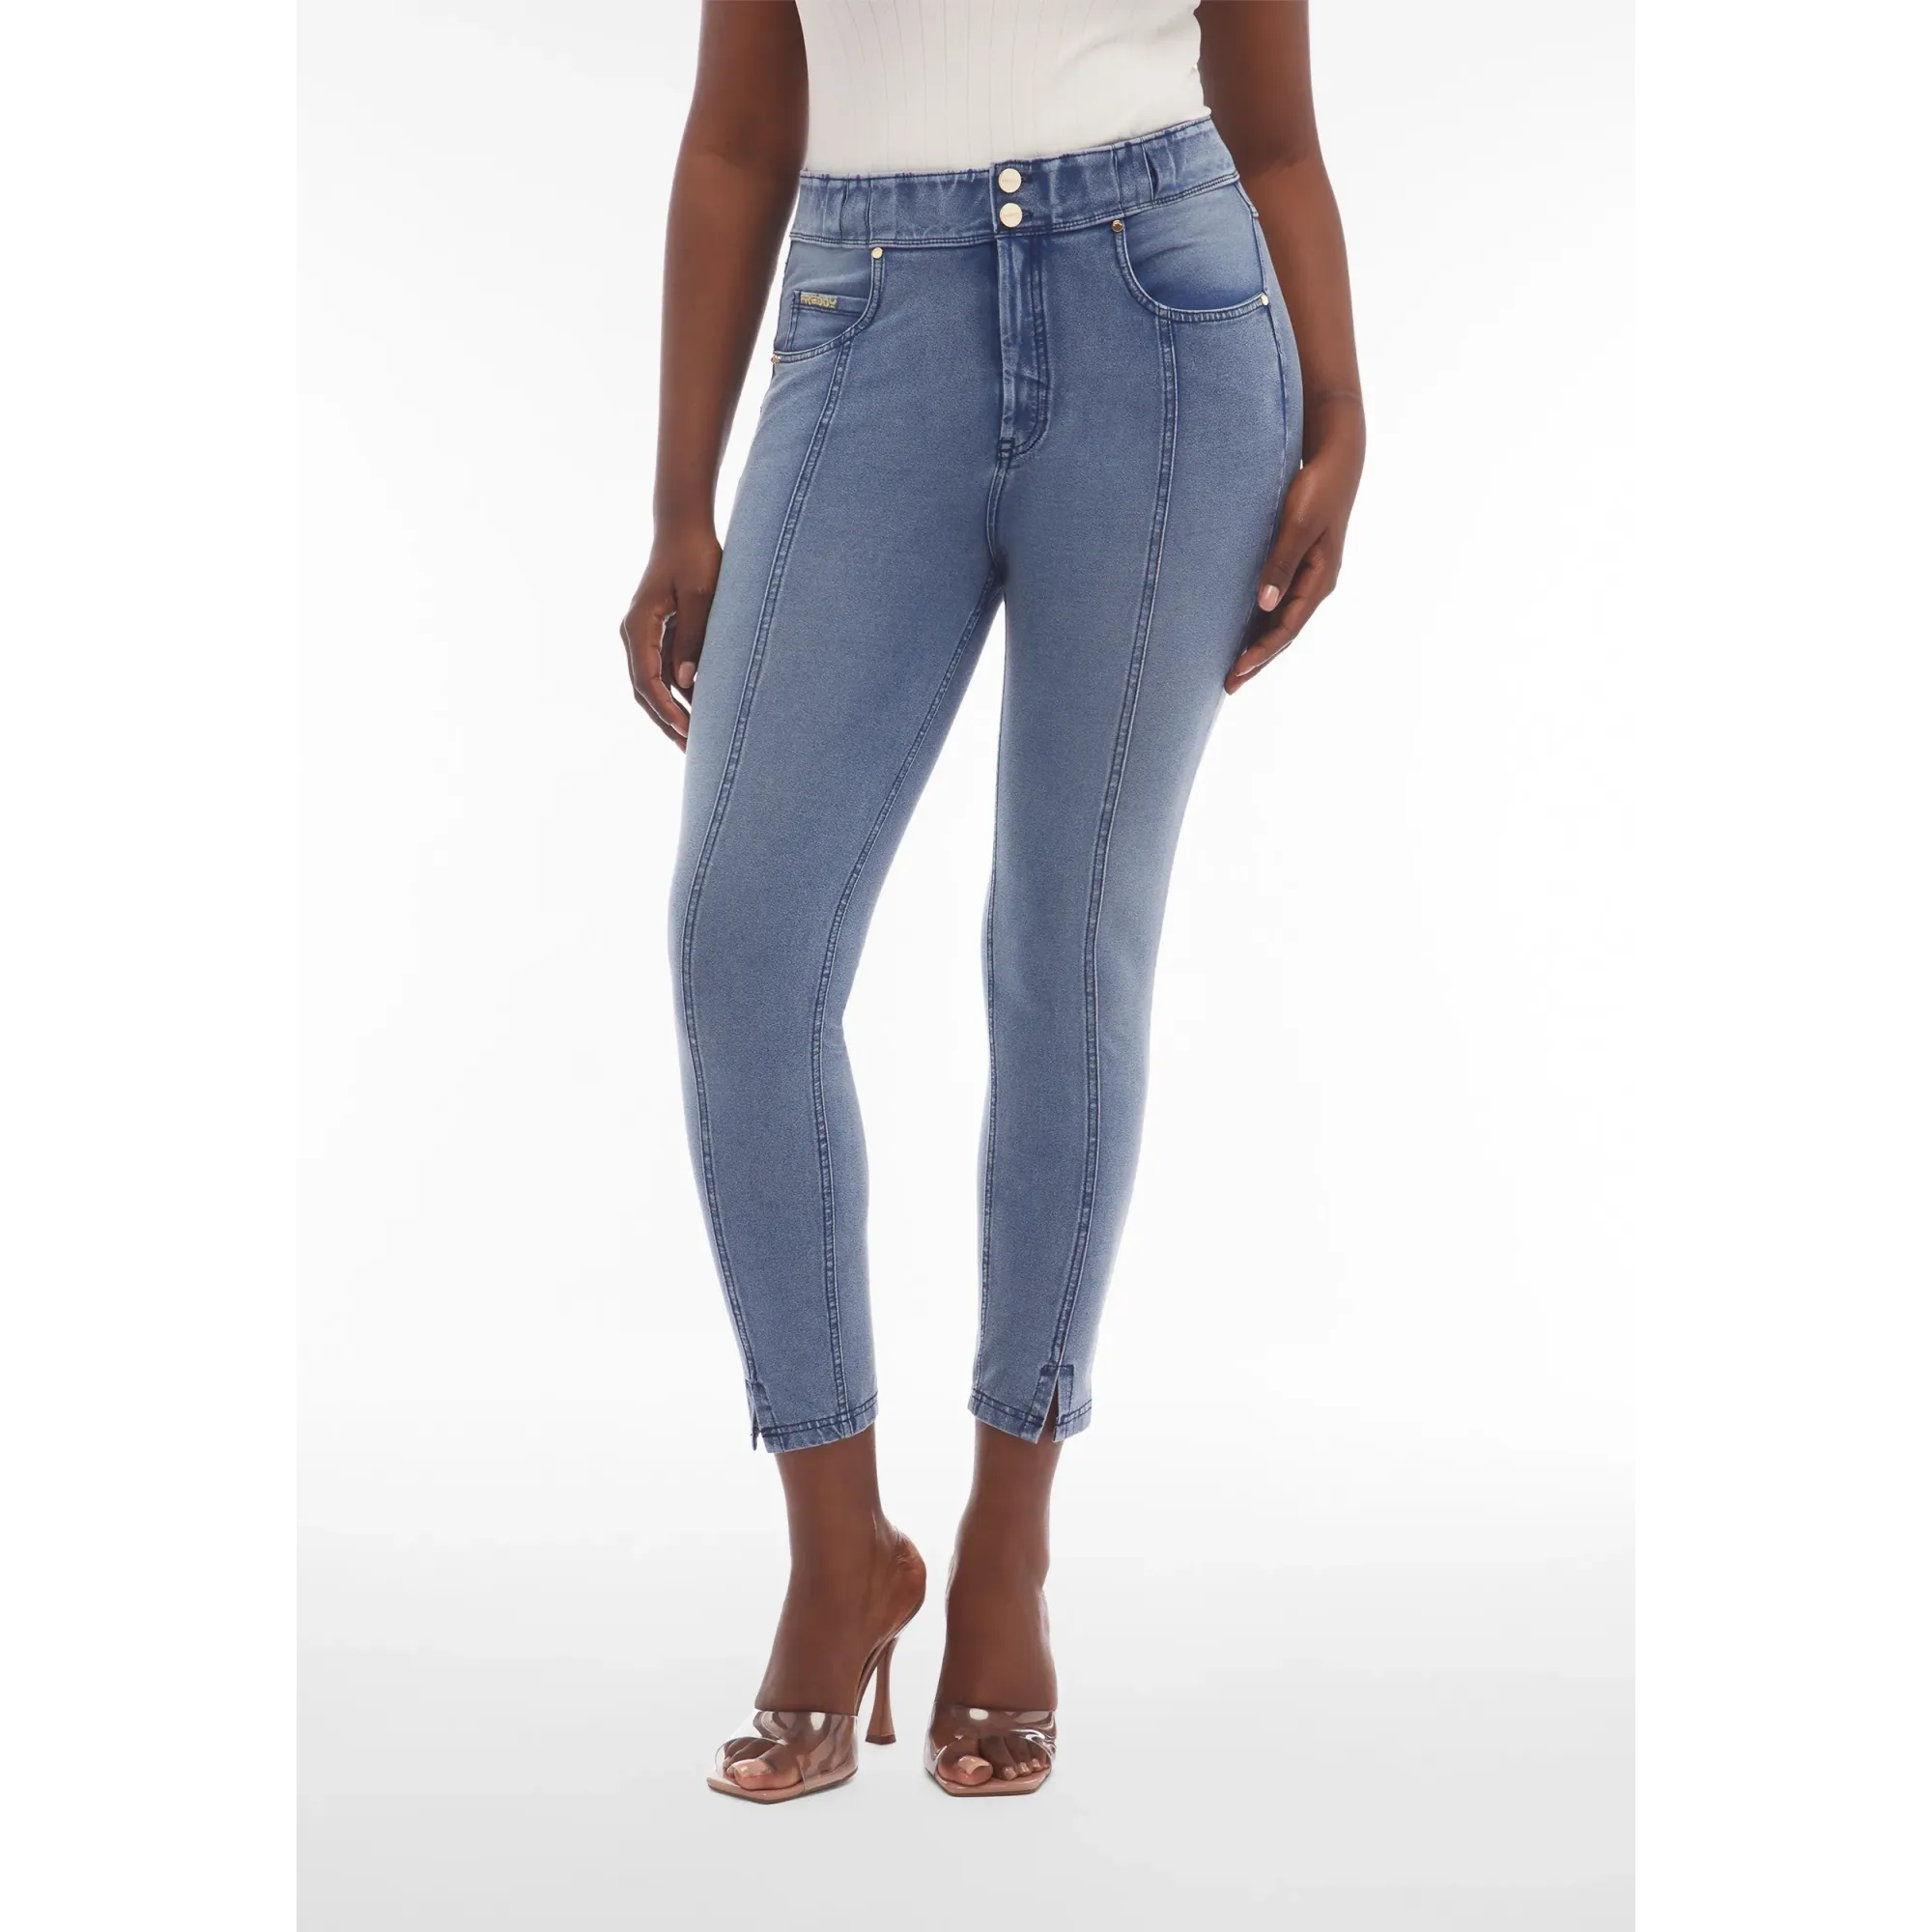 Freddy N.O.W.® Eco Damen Comfort Jeans - 7/8 High Waist Super Skinny - Denim - Blaue Nähte - J108B